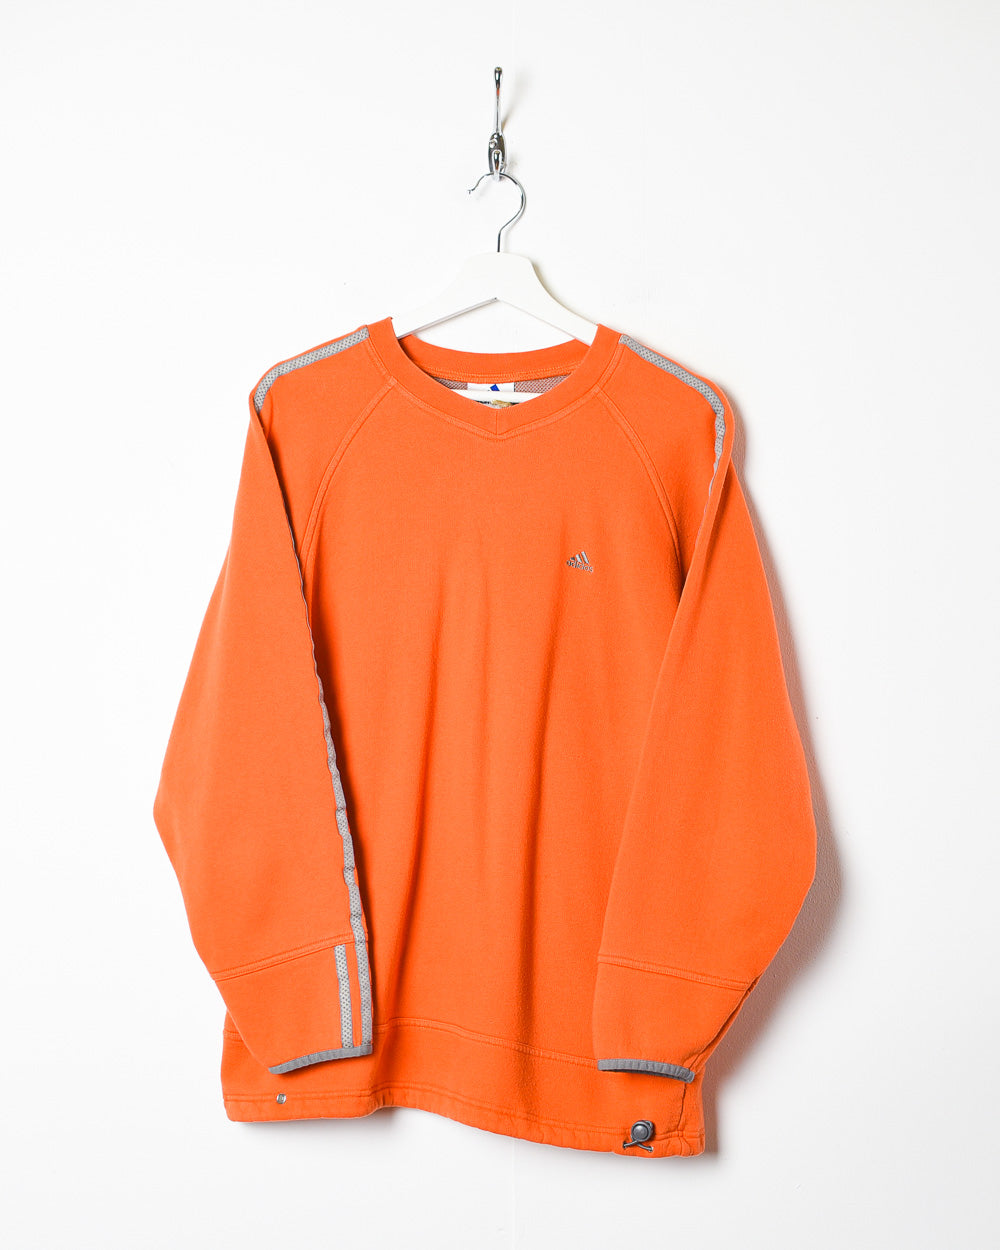 Orange Adidas Sweatshirt - Medium